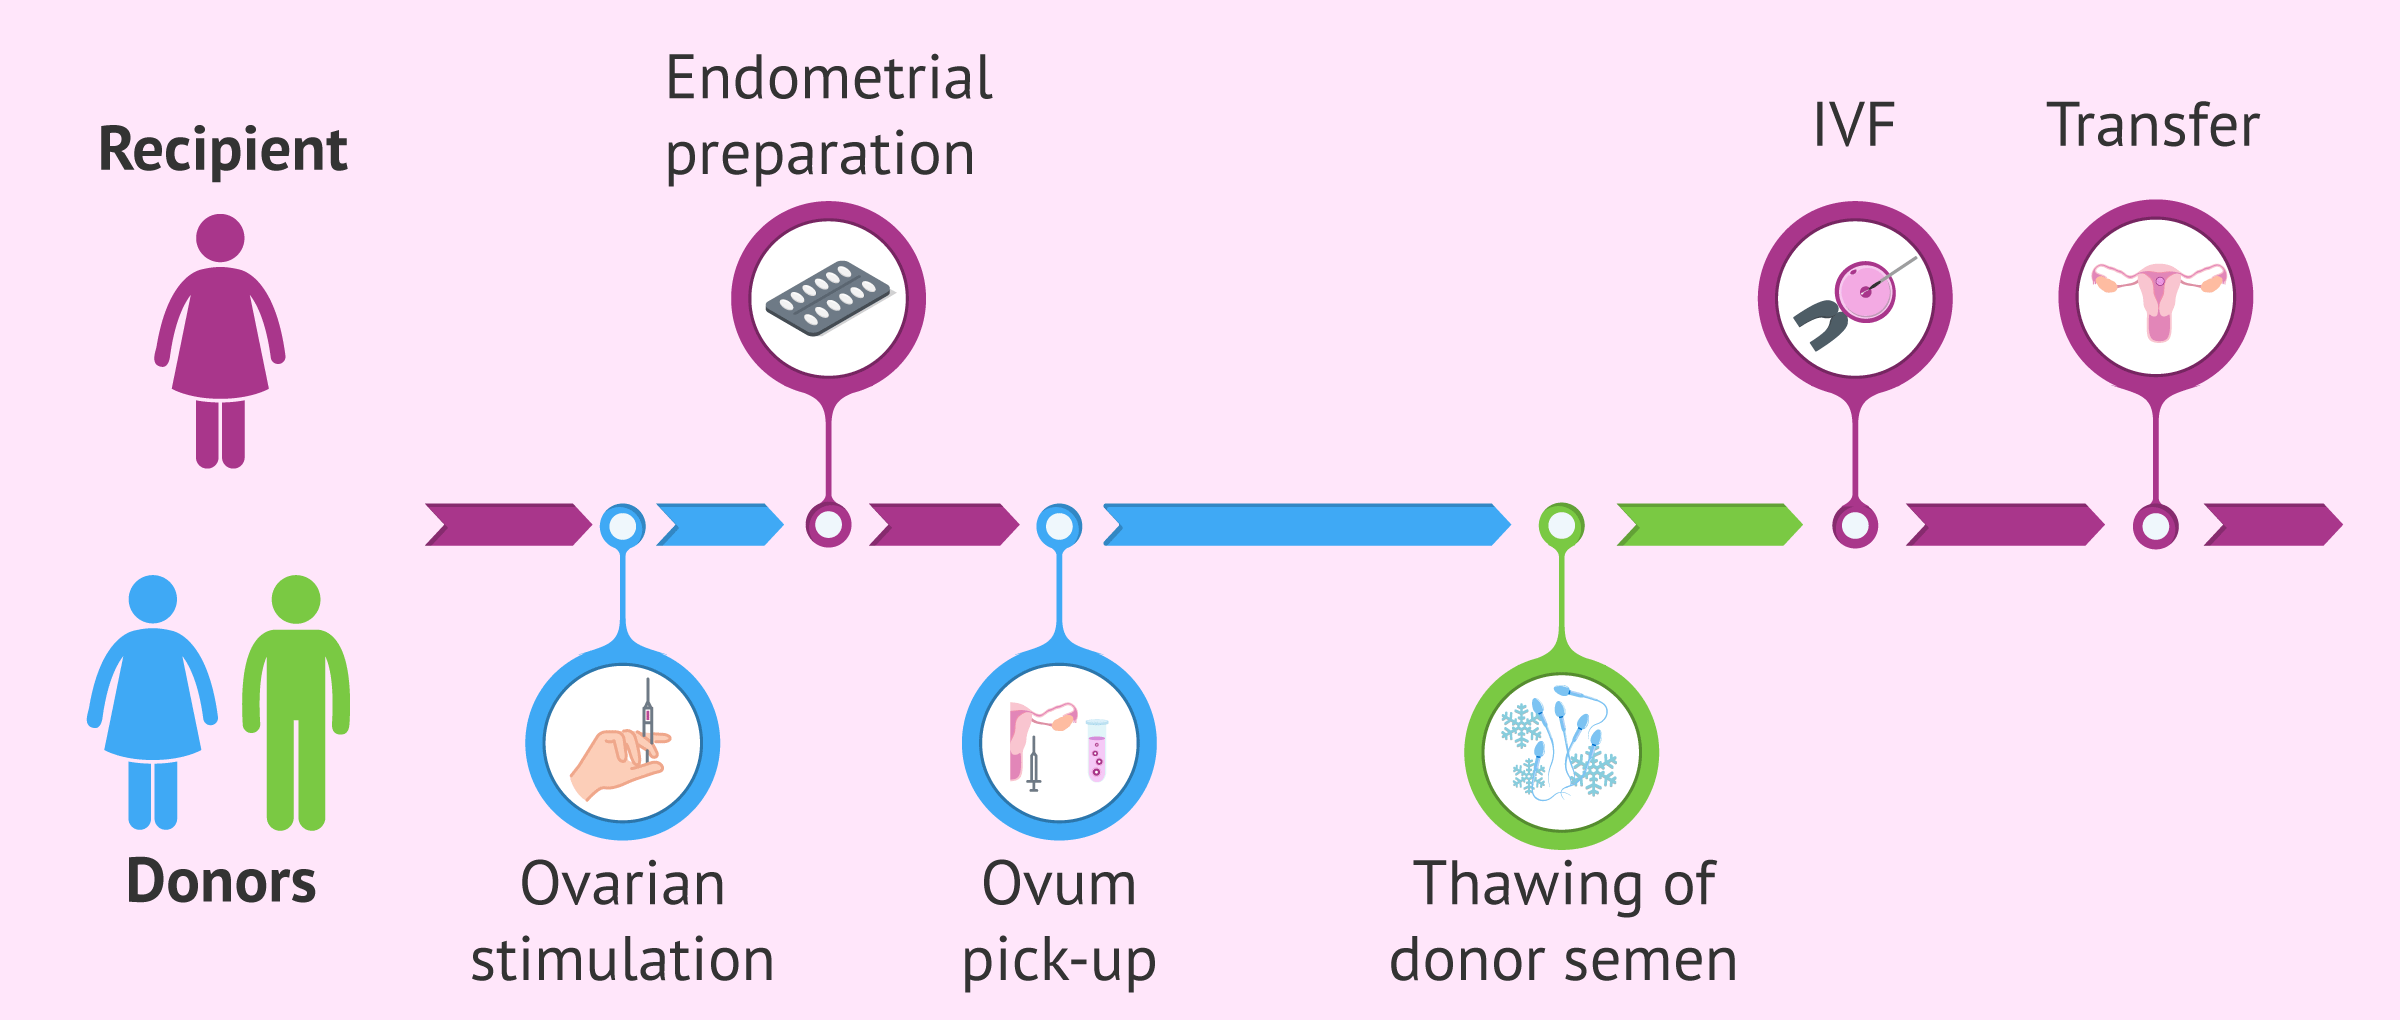 Endometrio para transferencia